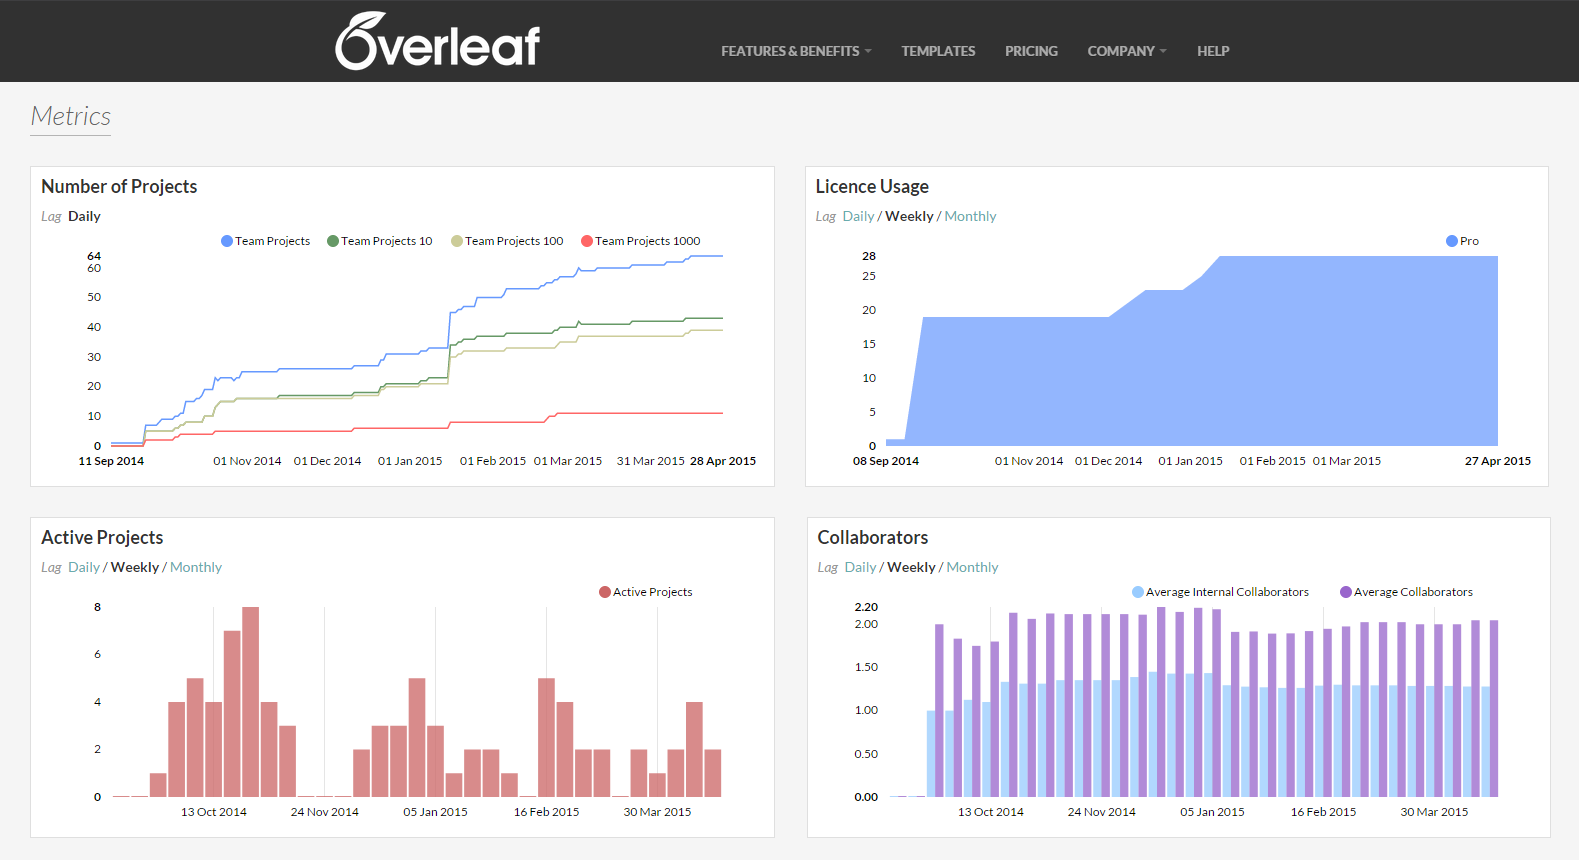 Brown University Overleaf metrics example screenshot